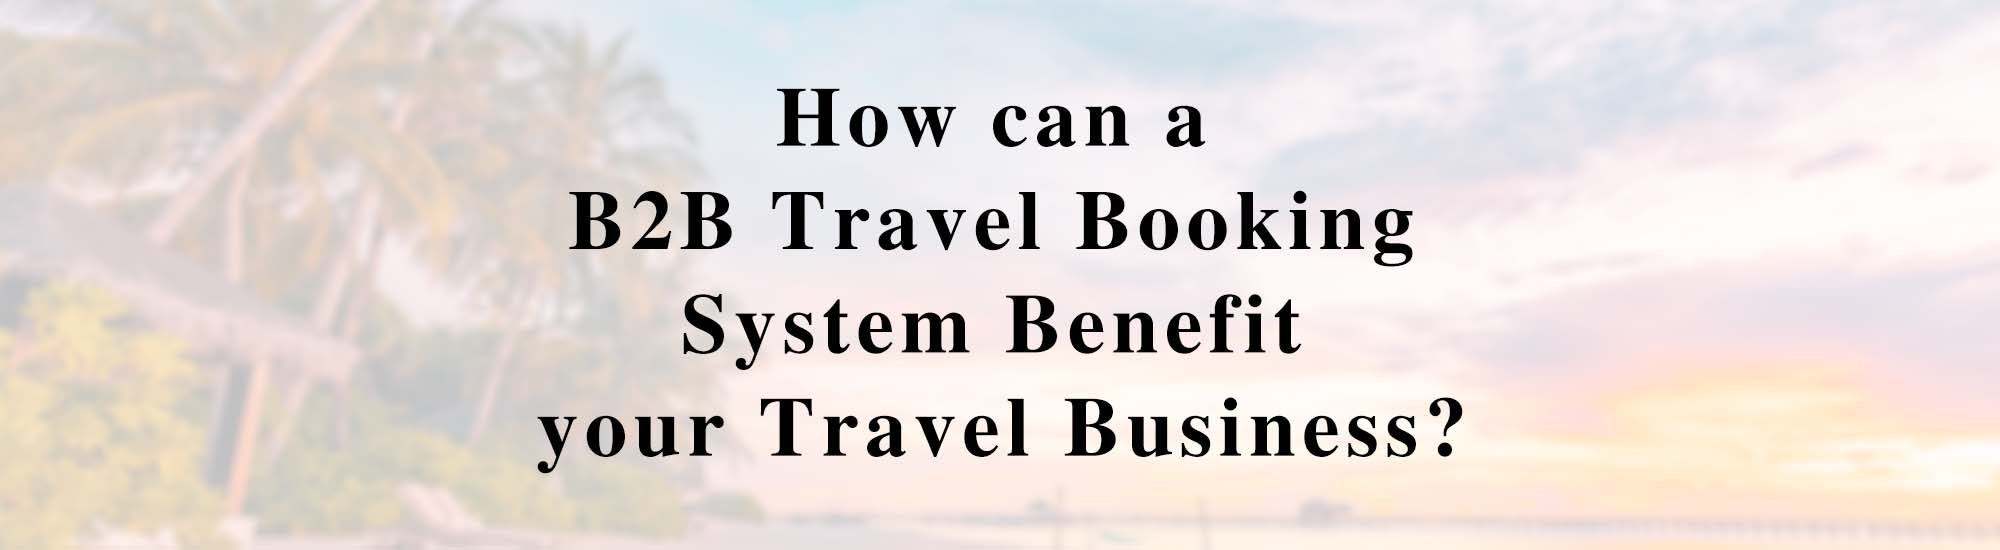 B2B Travel Booking System